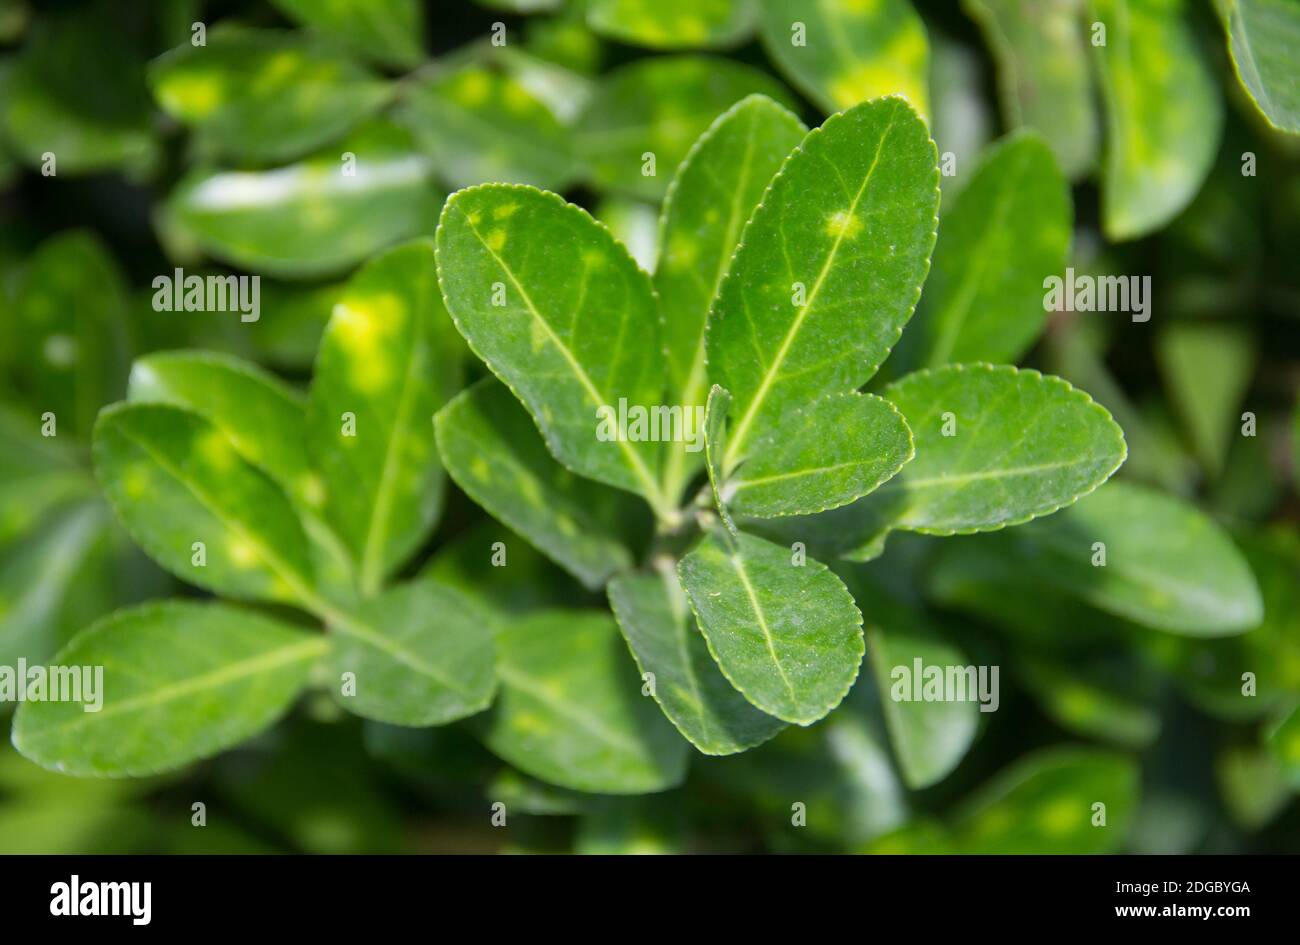 Green tea plant bush background pattern environmental natural natural texture element Stock Photo